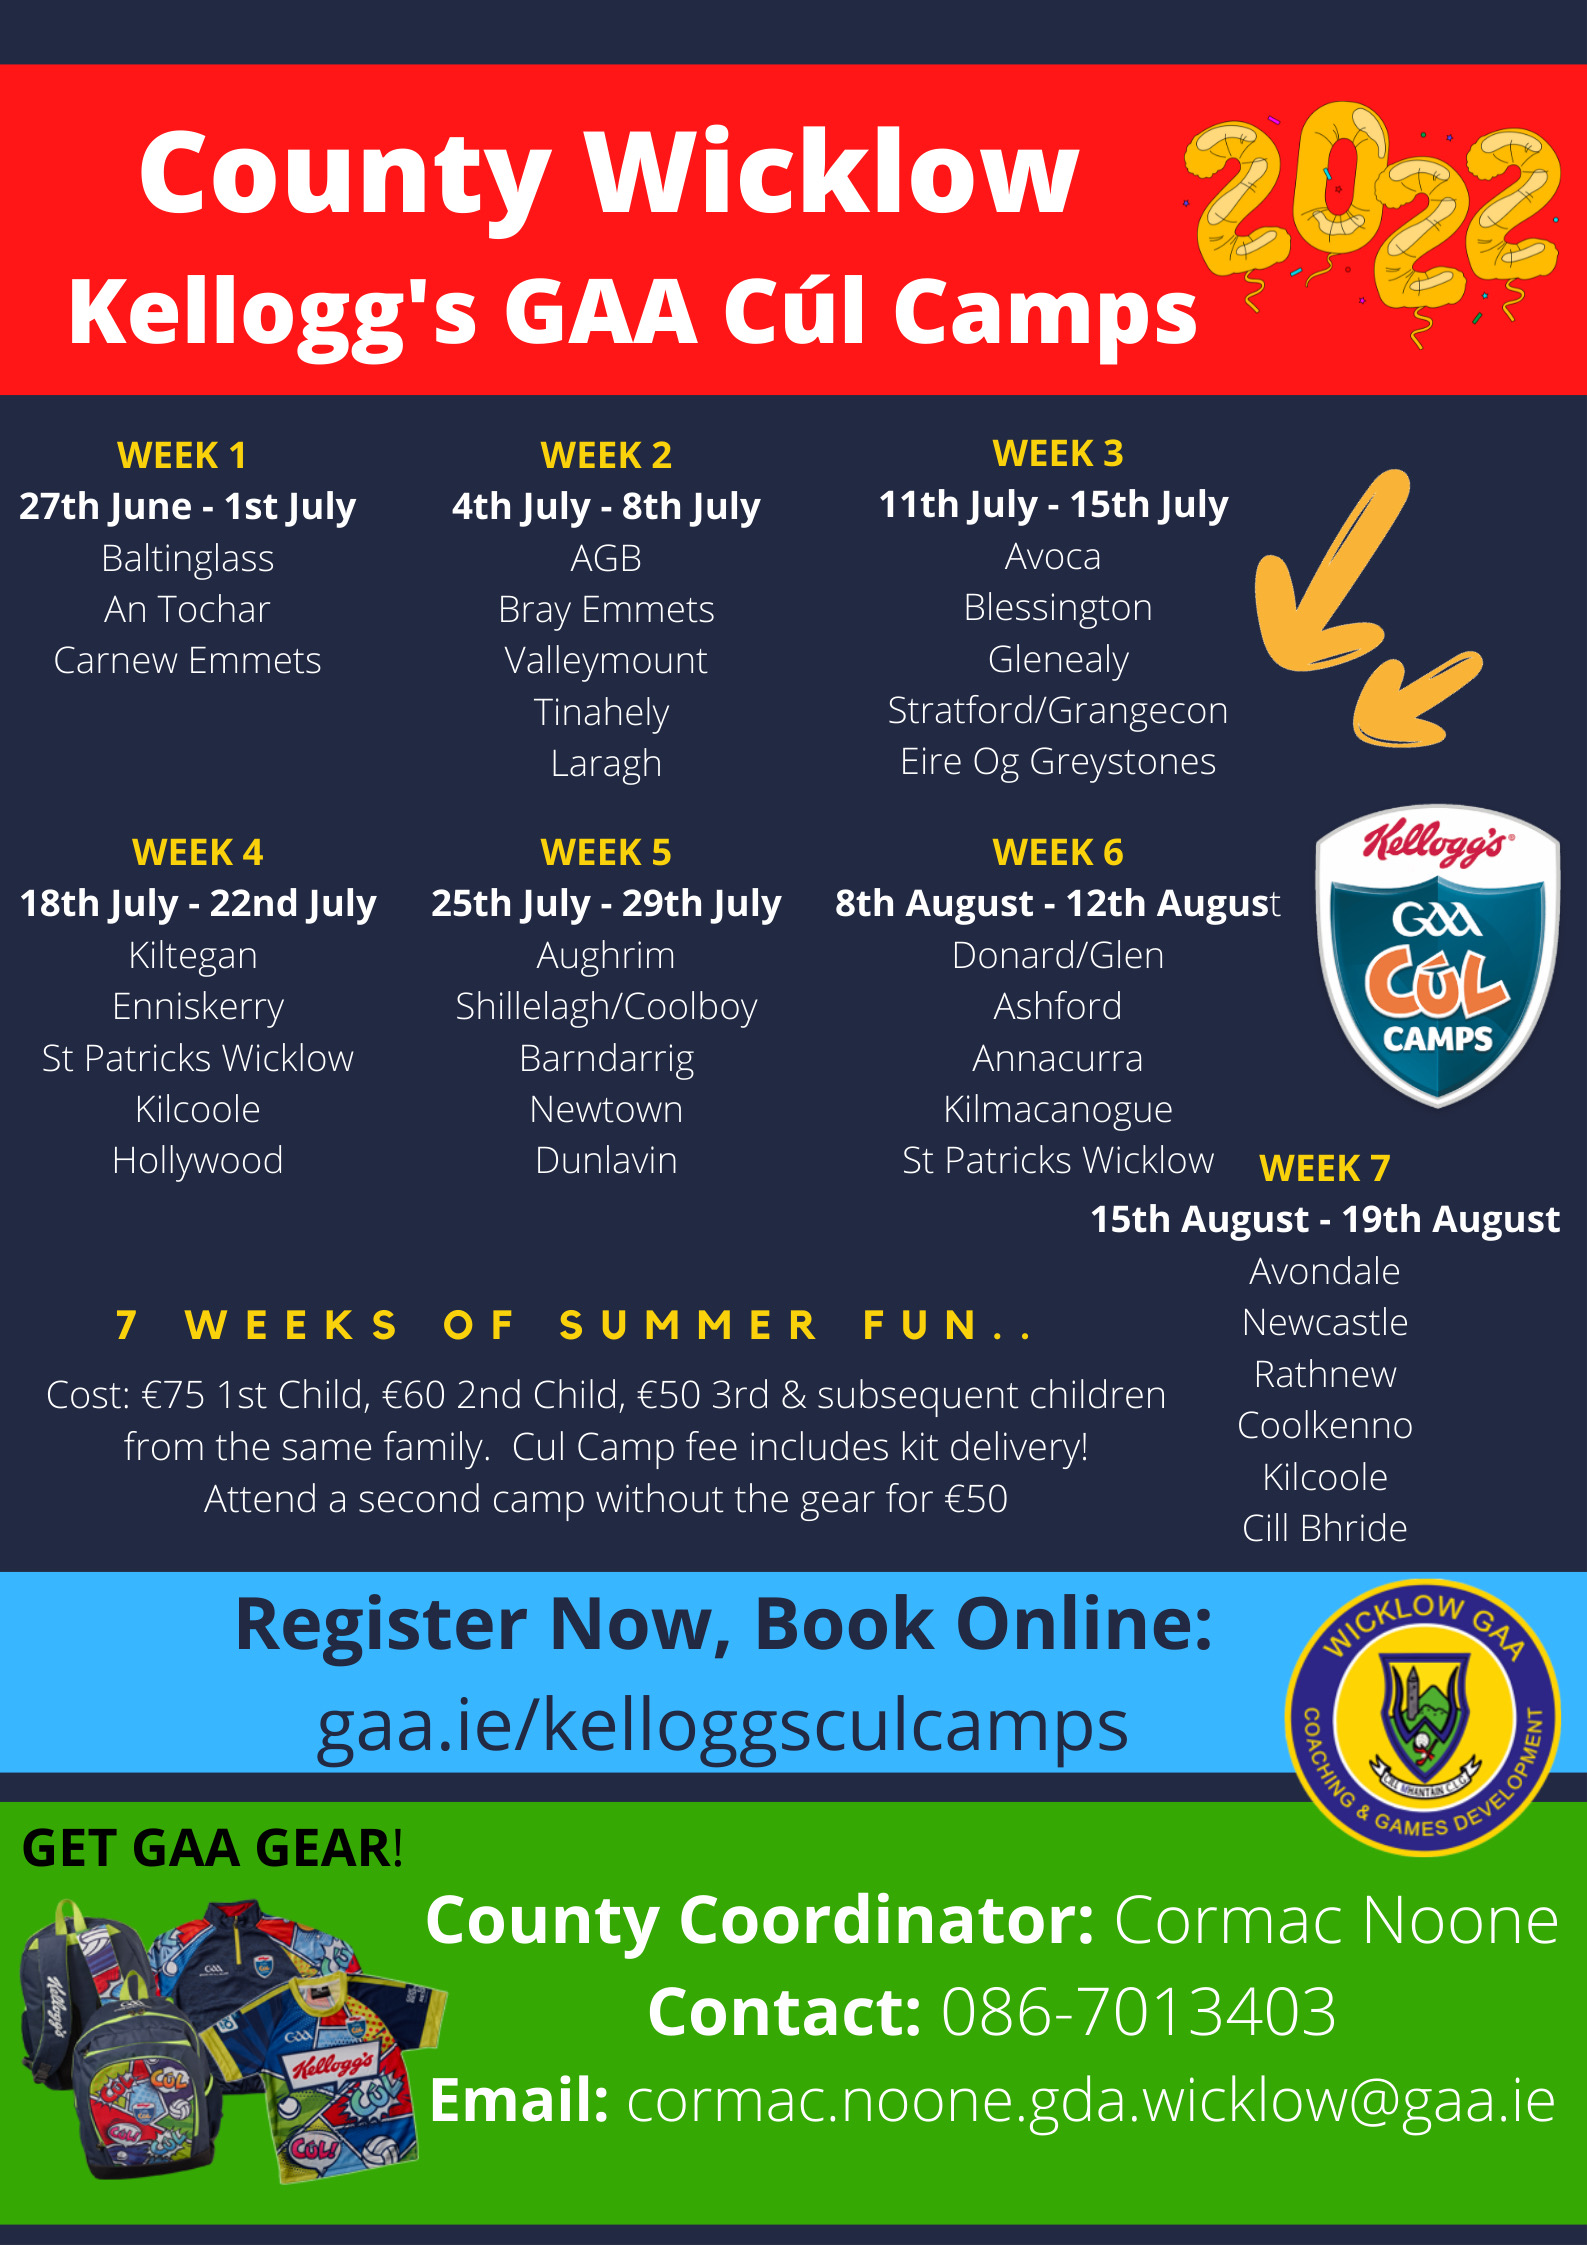 Kellogg’s GAA Cúl Camp Website is Open